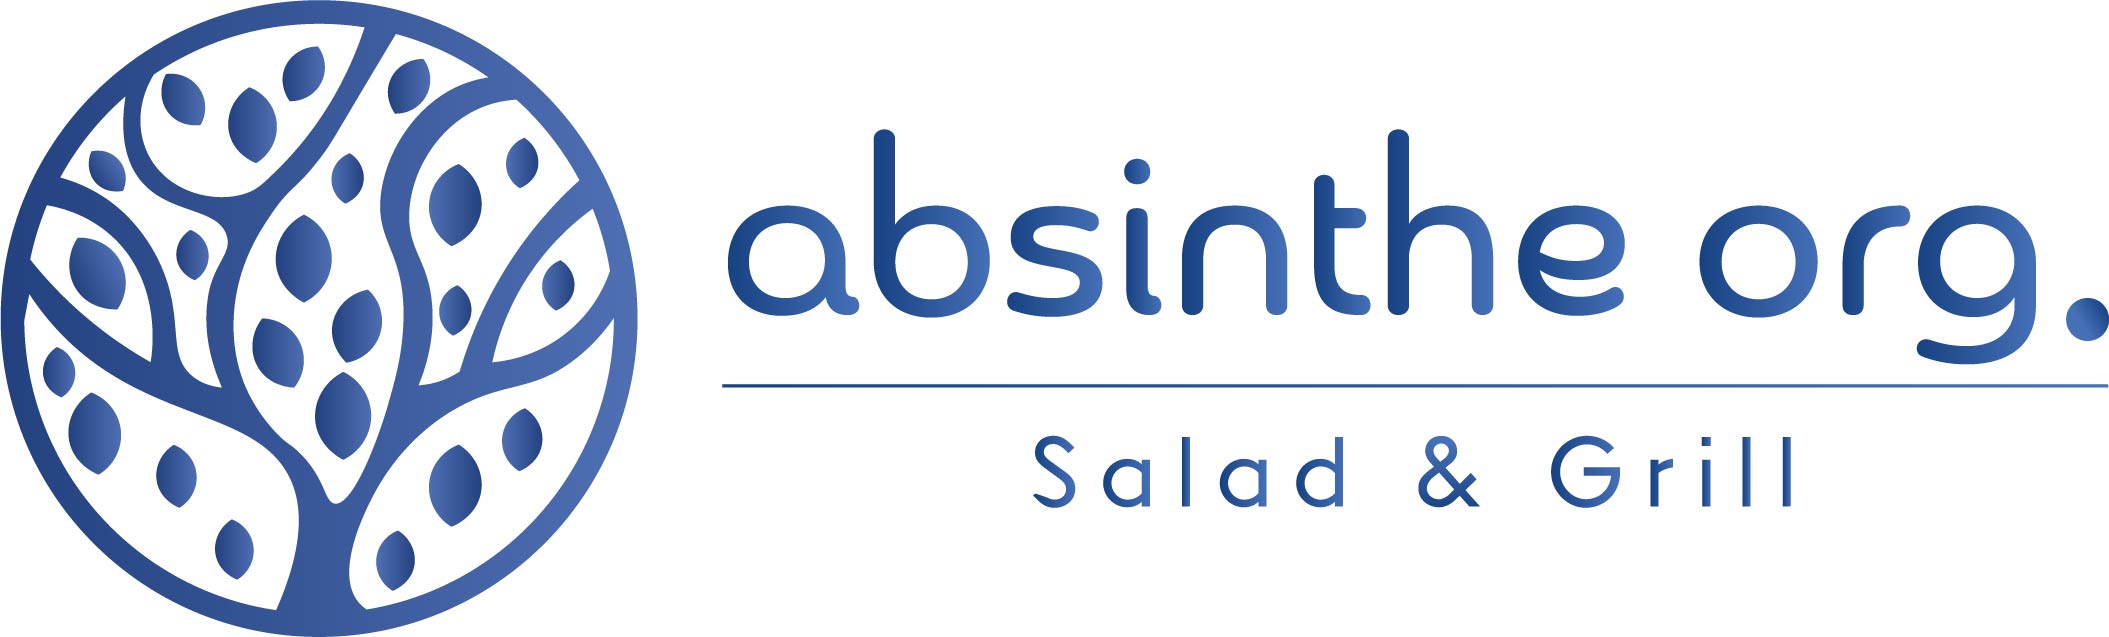 absinthe org.Salad&Grill